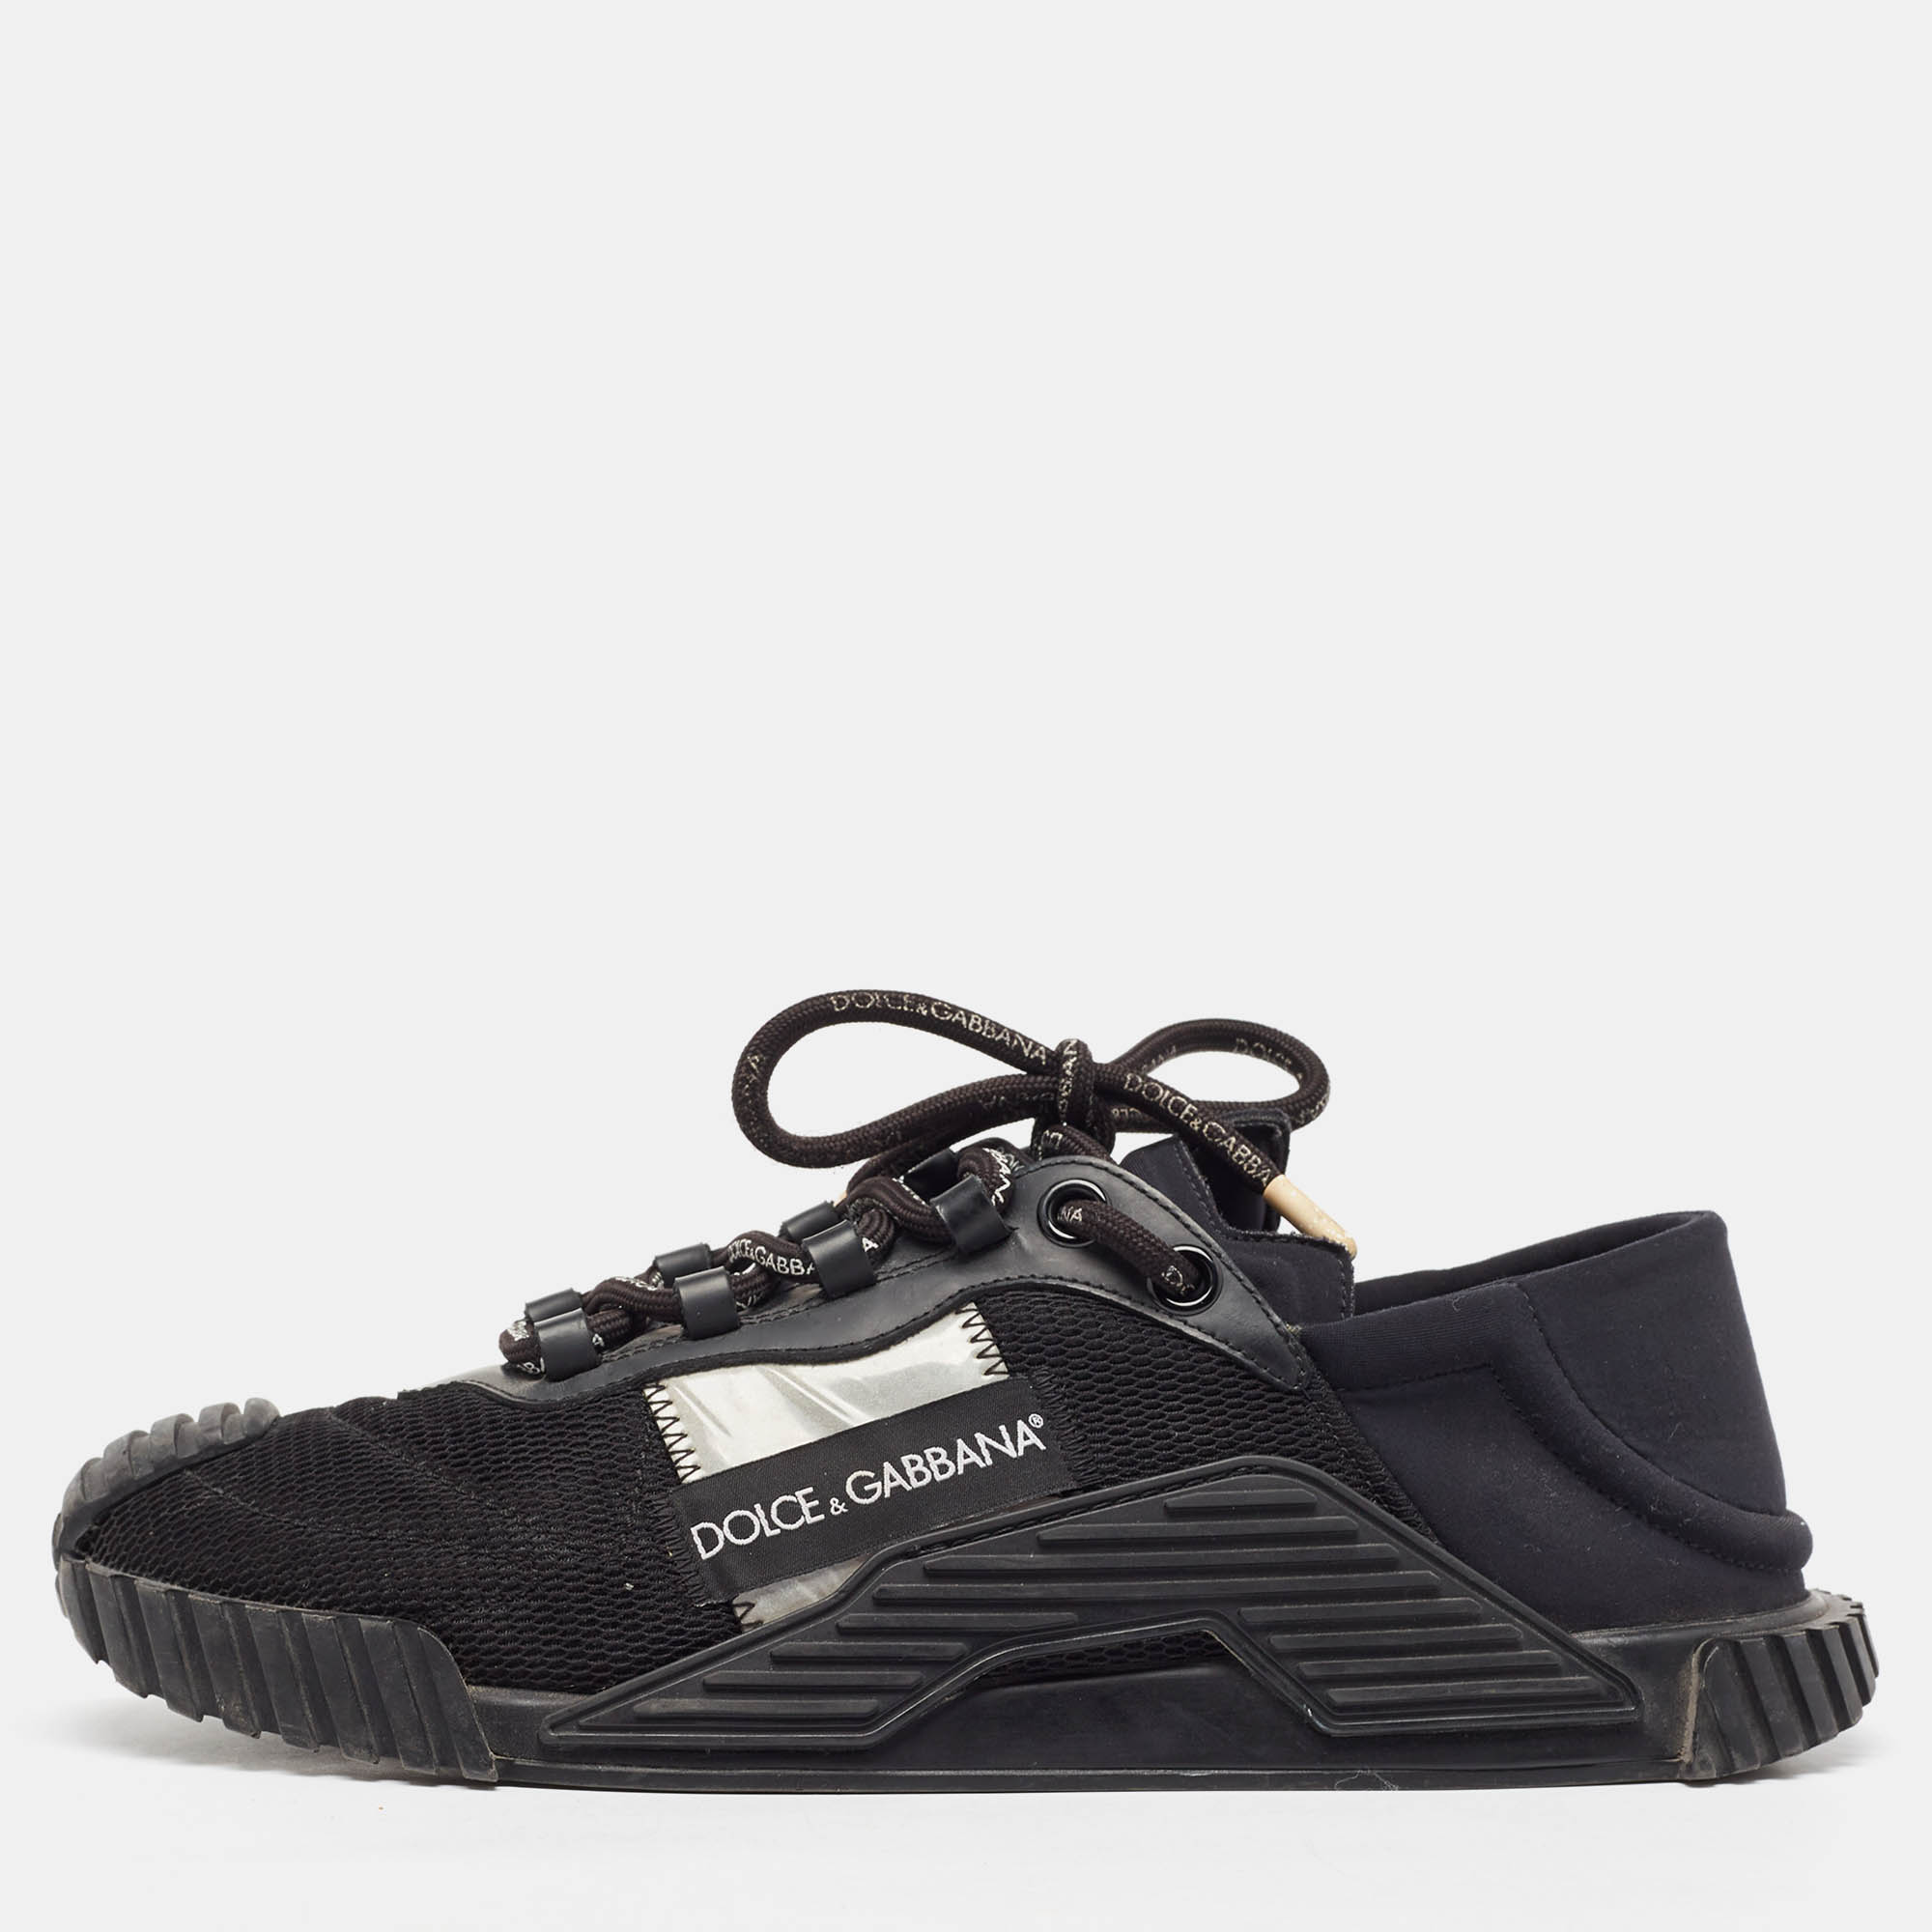 Dolce & gabbana black mesh and neoprene ns1 sneakers size 42